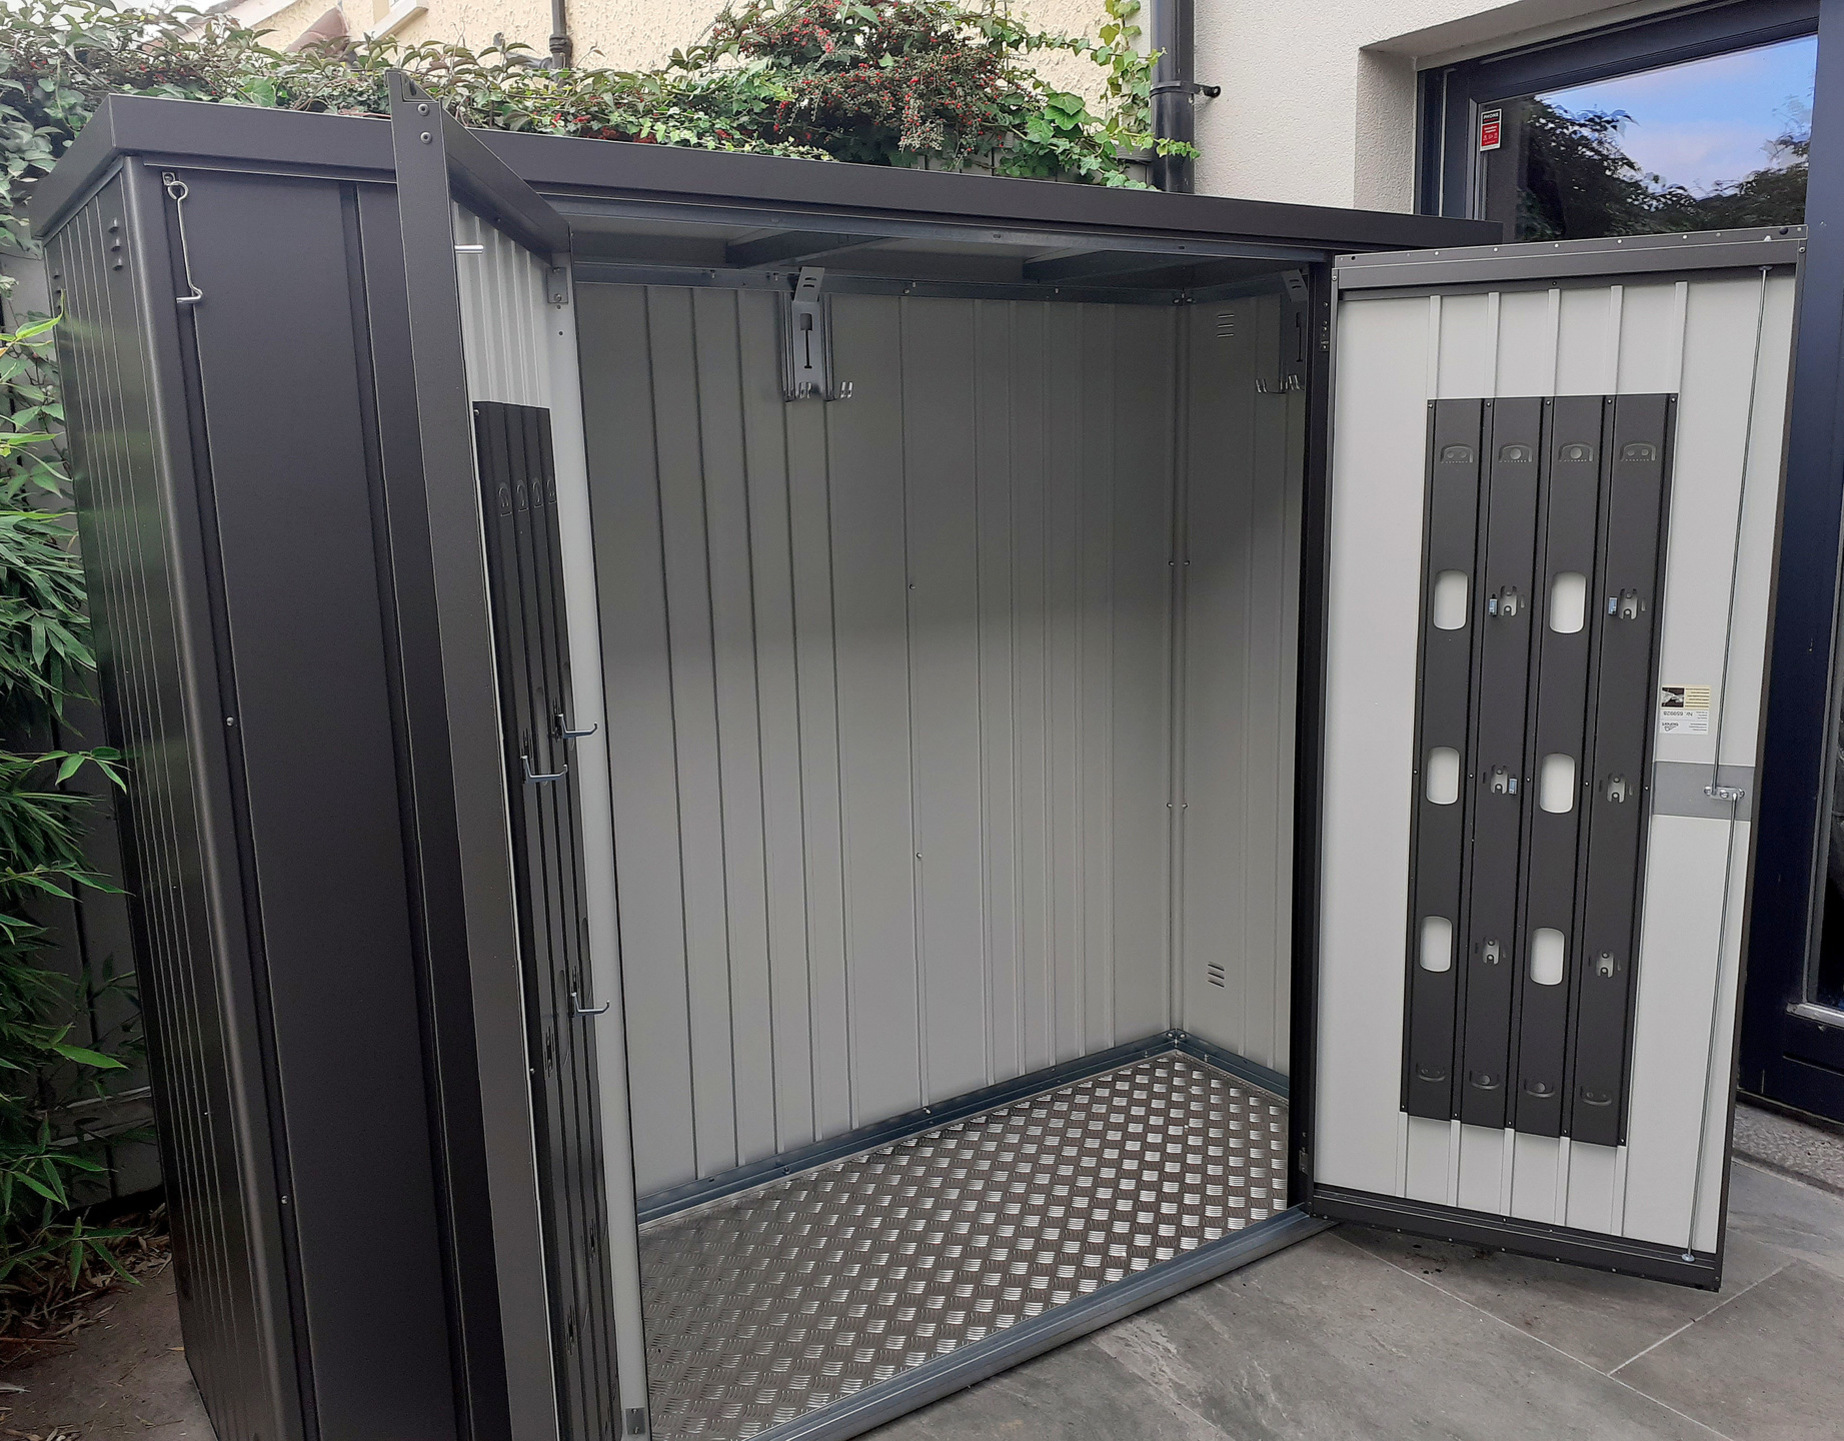 Biohort Equipment Locker 230 in metallic dark grey, supplied + fitted in Terenure, Dublin 6W | Stylish, Versatile, Secure & Rainproof Patio Storage Solutions | FREE Fitting